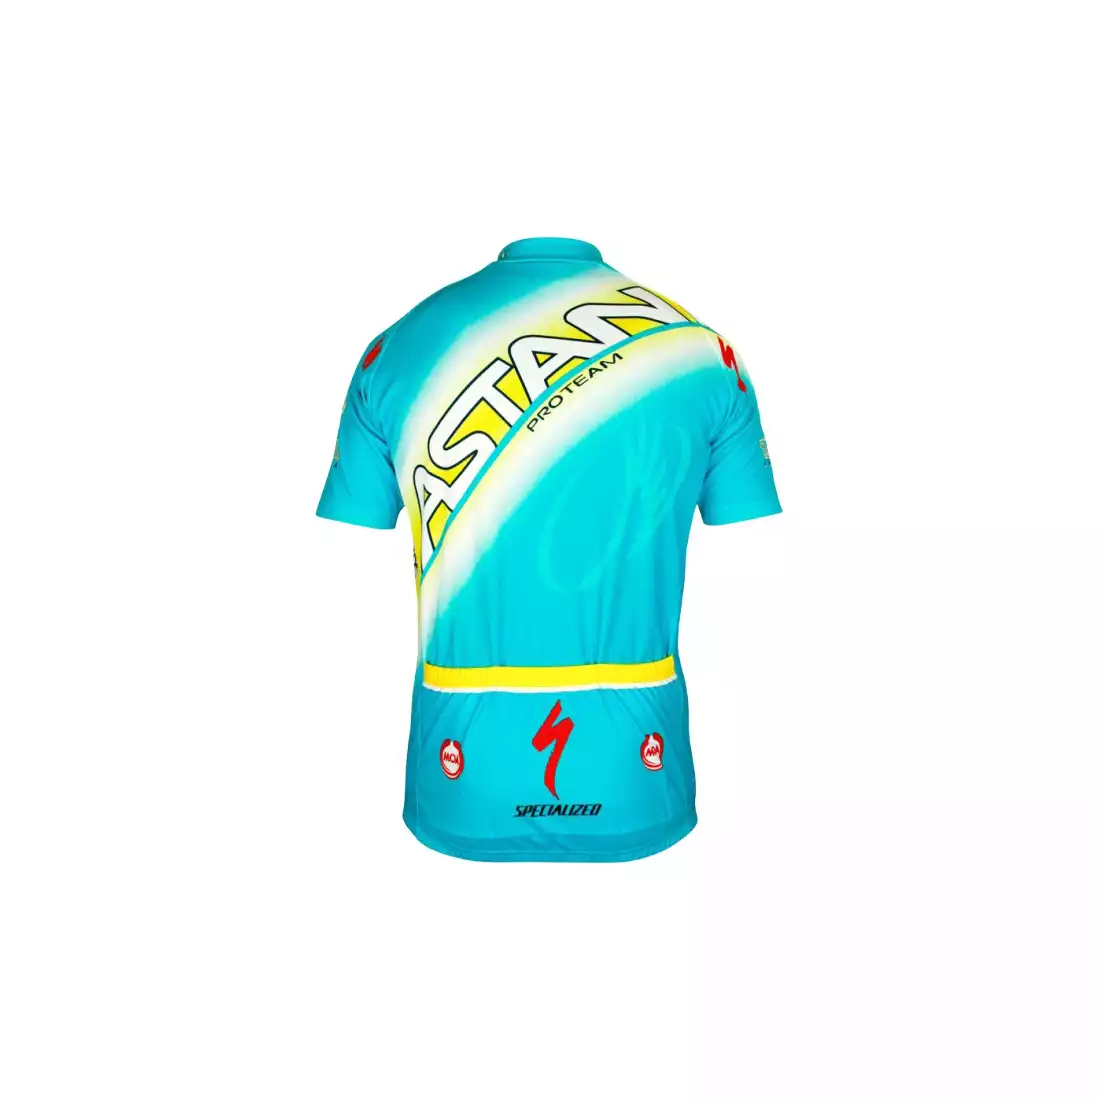 NALINI - TEAM ASTANA 2013 - koszulka rowerowa